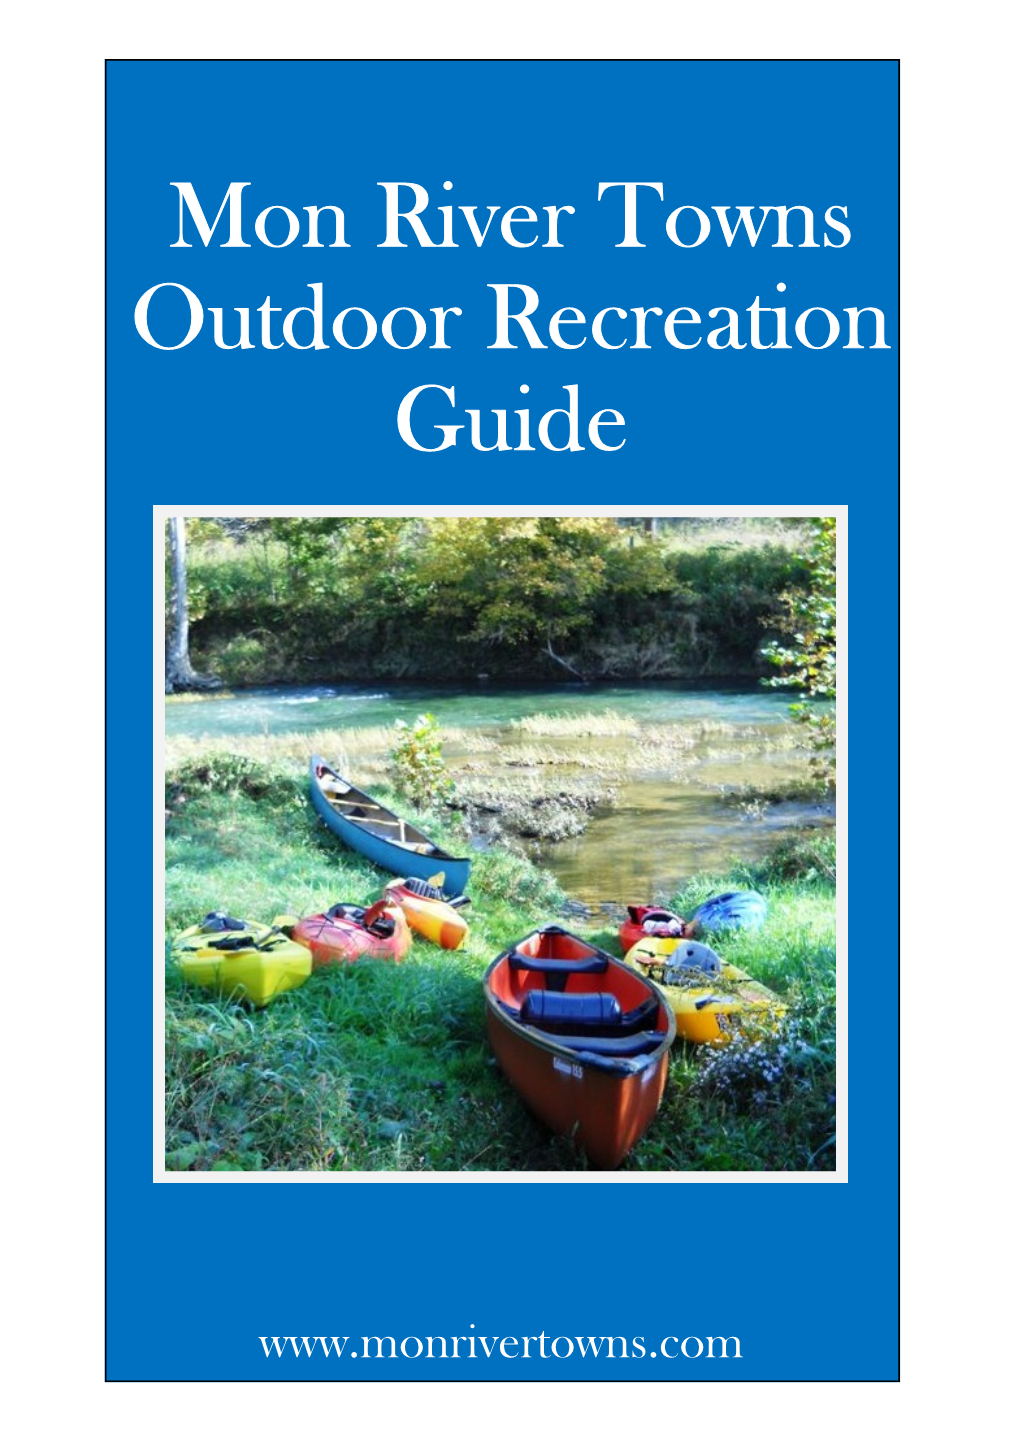 Mon River Towns Outdoor Recreation Guide